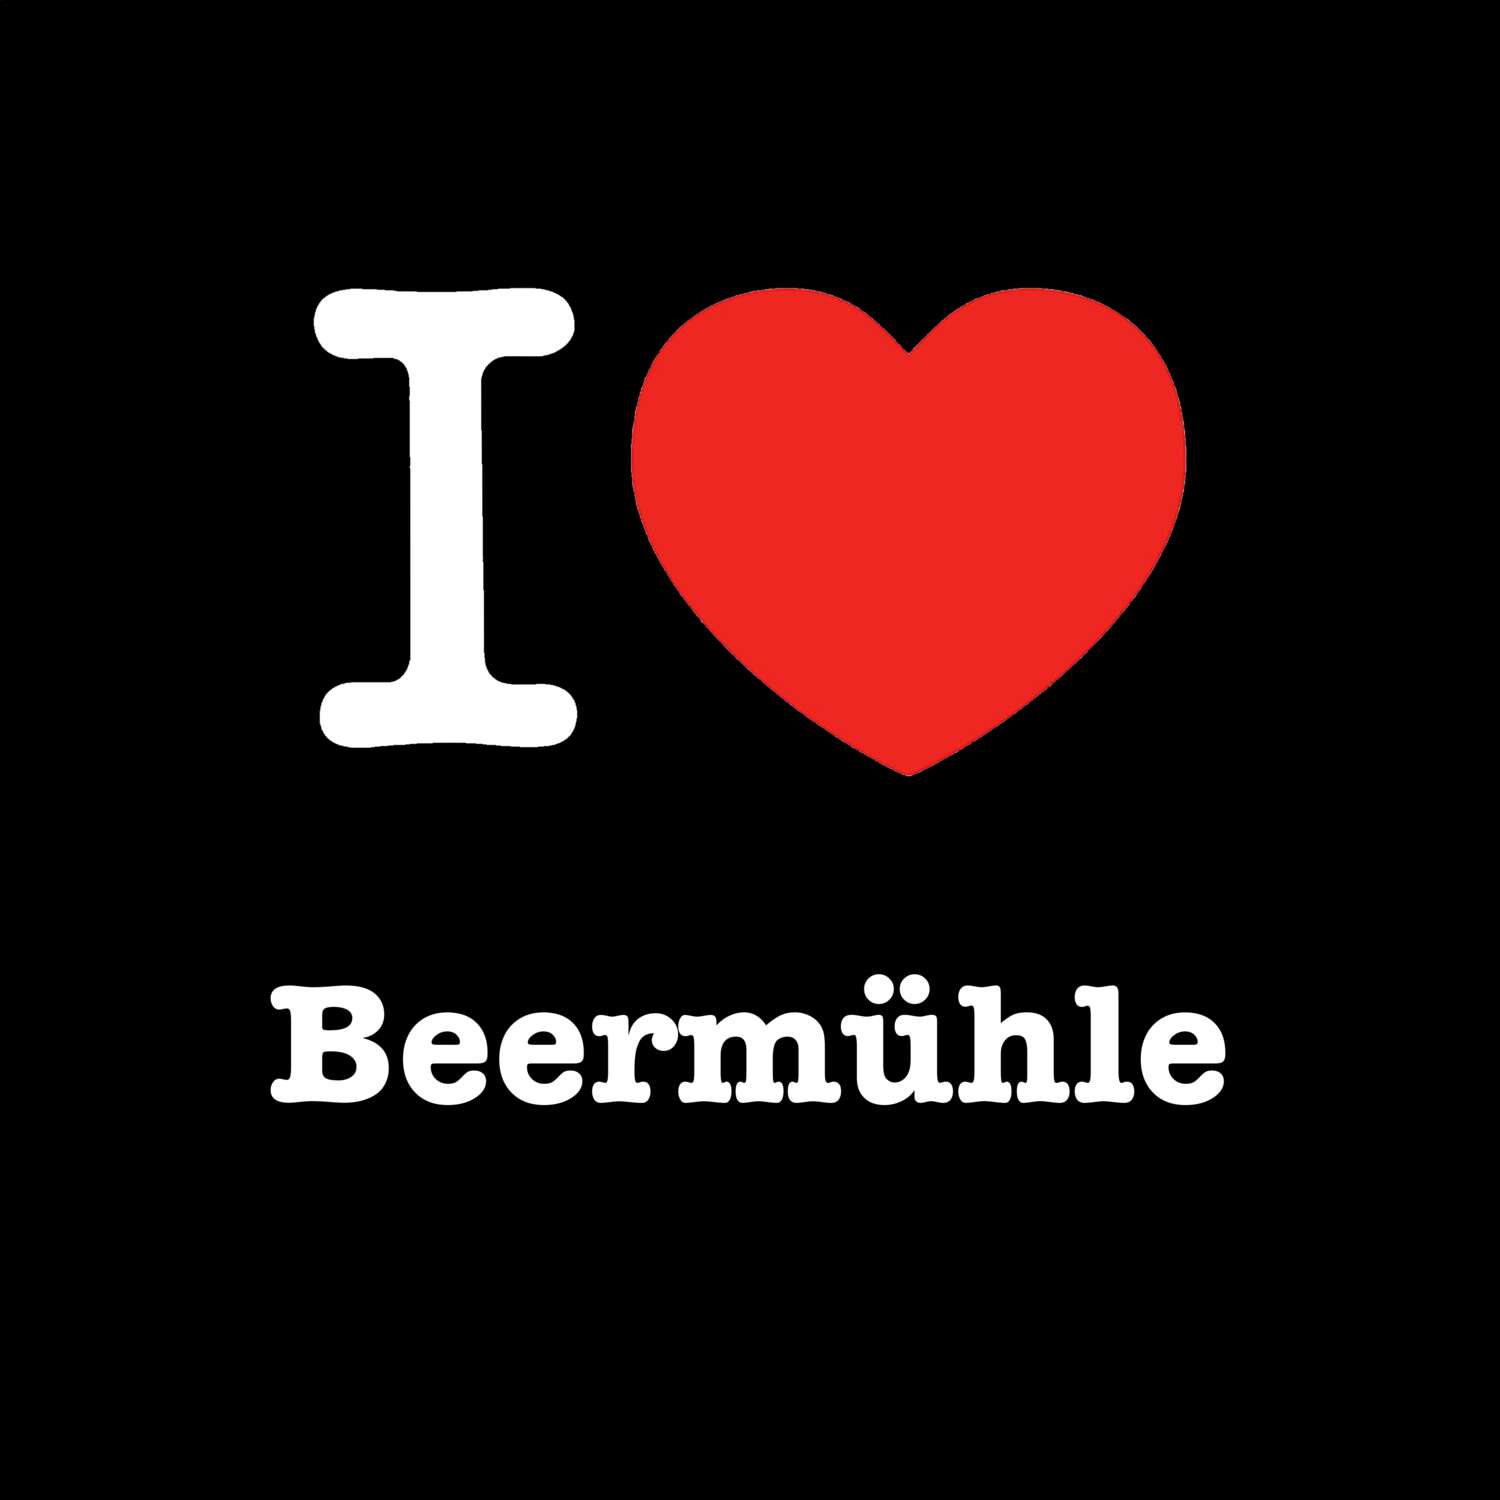 Beermühle T-Shirt »I love«